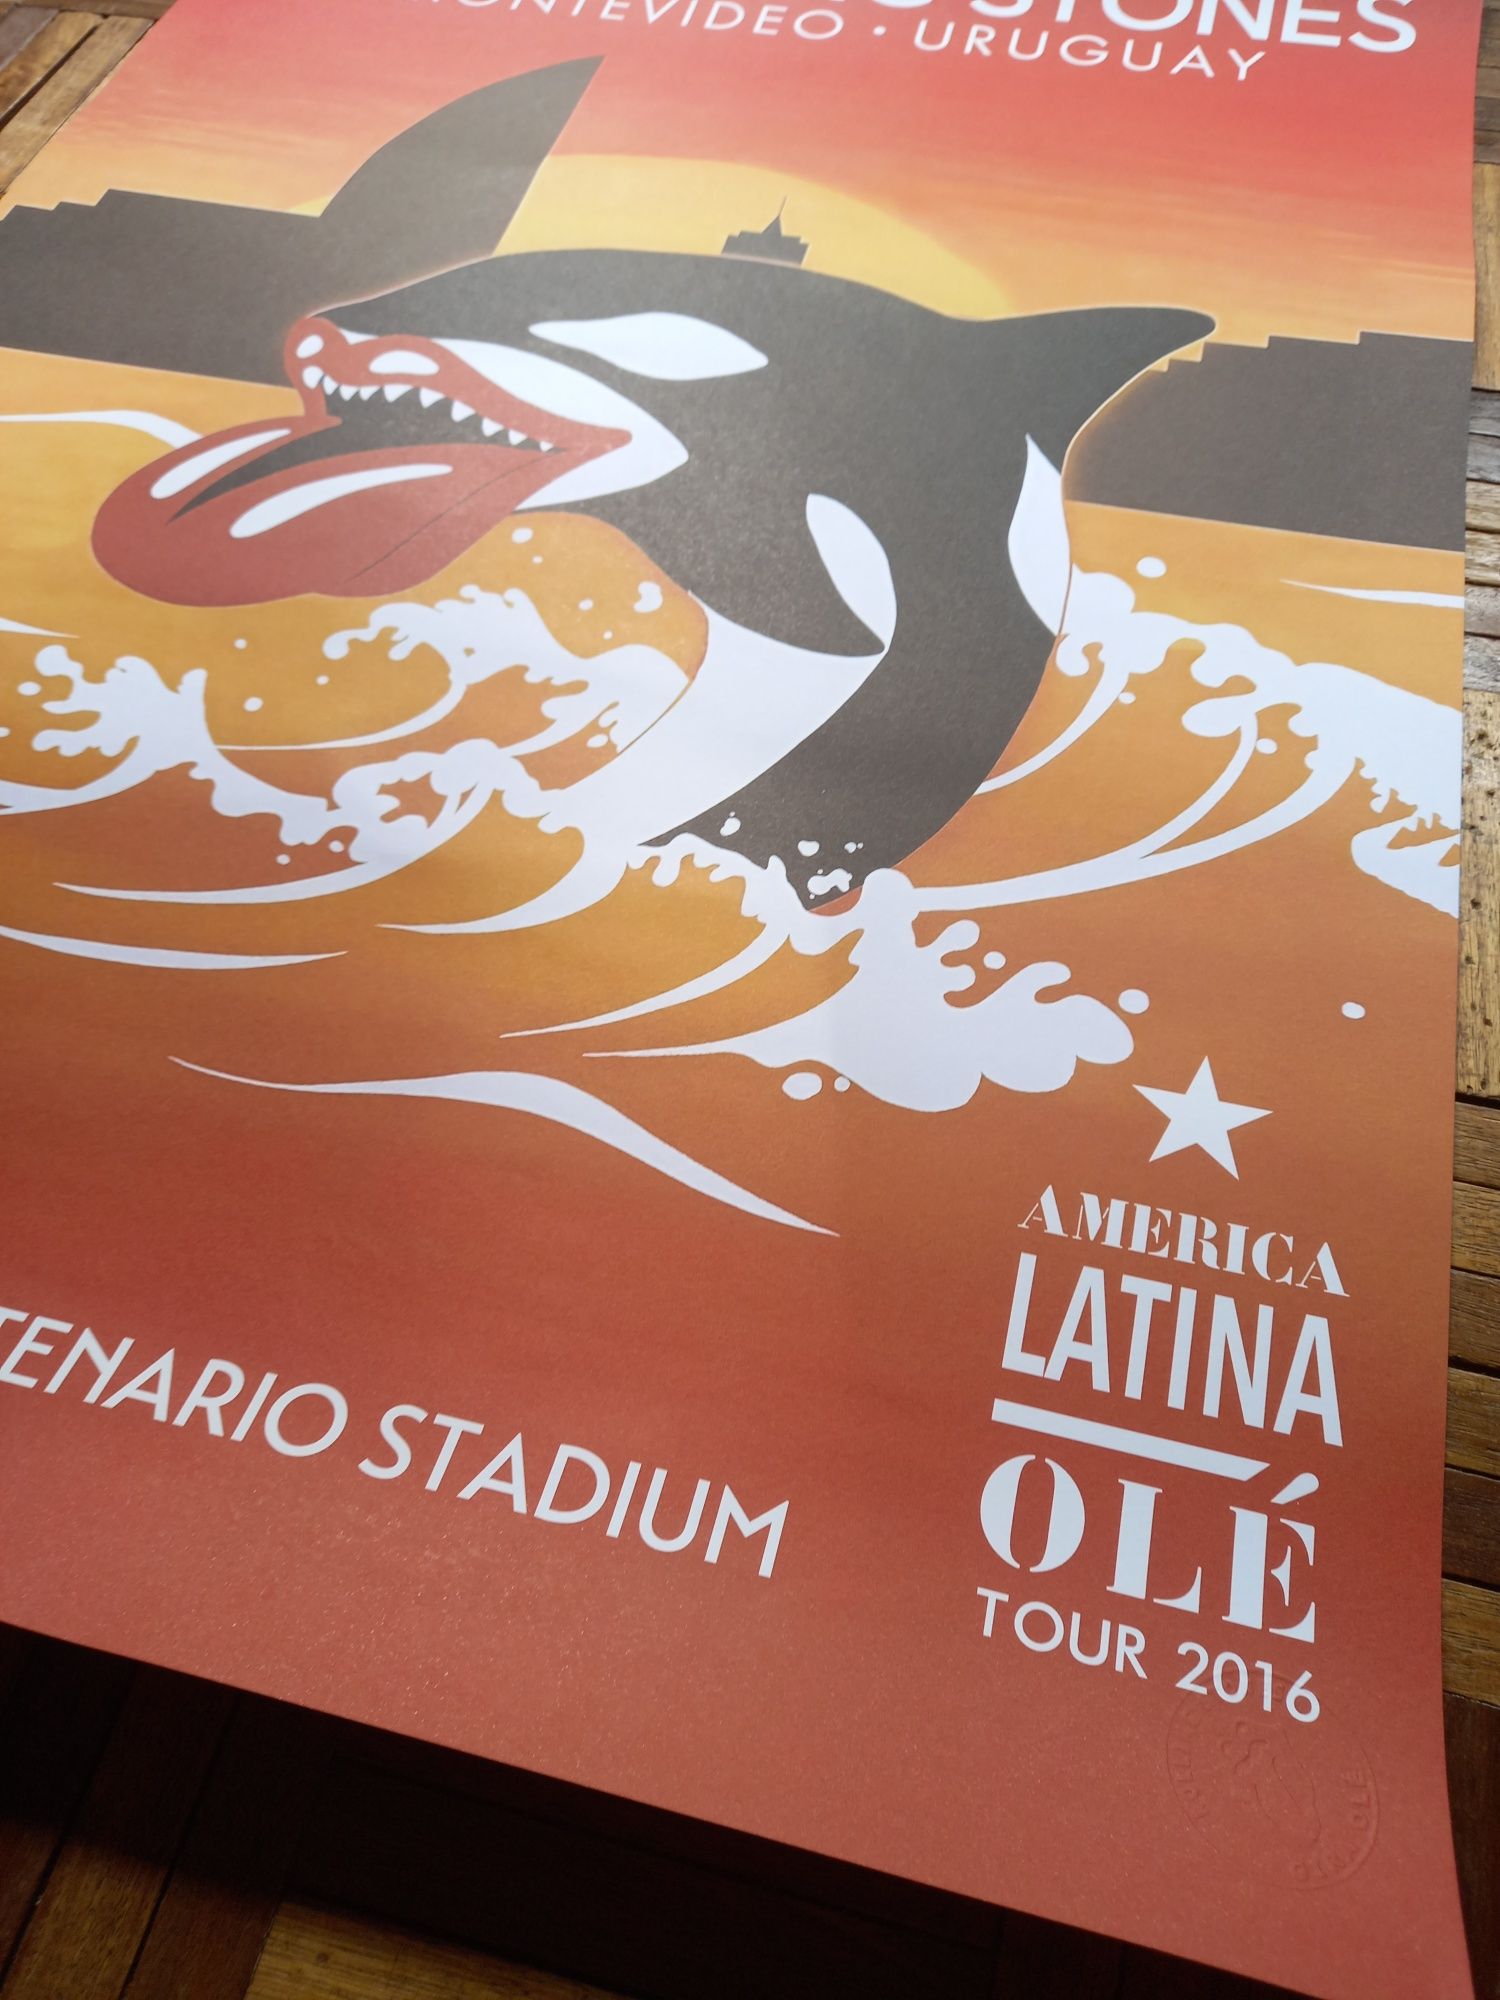 Poster dos Rolling Stones concerto America Latina Olé Tour